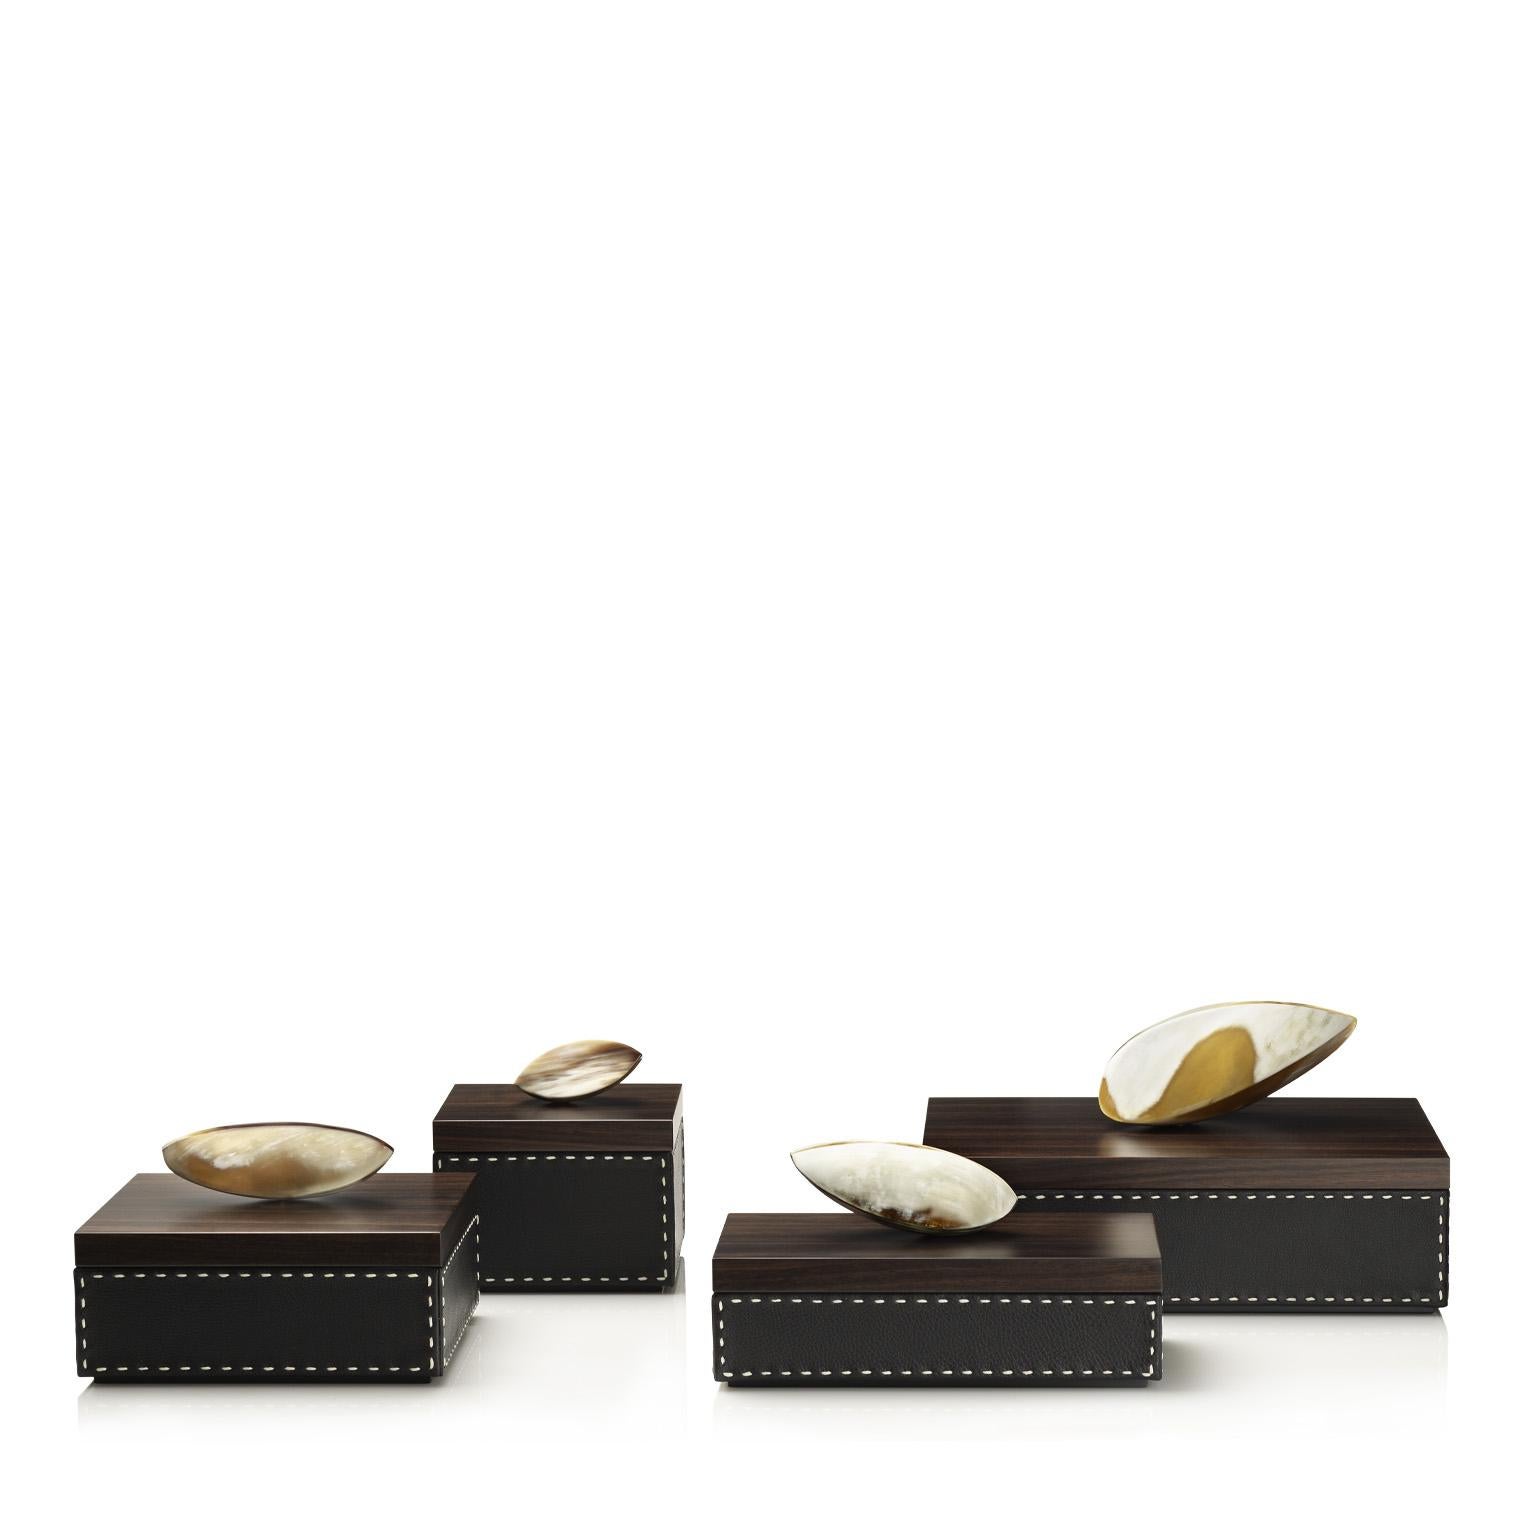 Capricia Box in Pebbled leather with Handle in Corno Italiano, Mod. 4472 For Sale 1